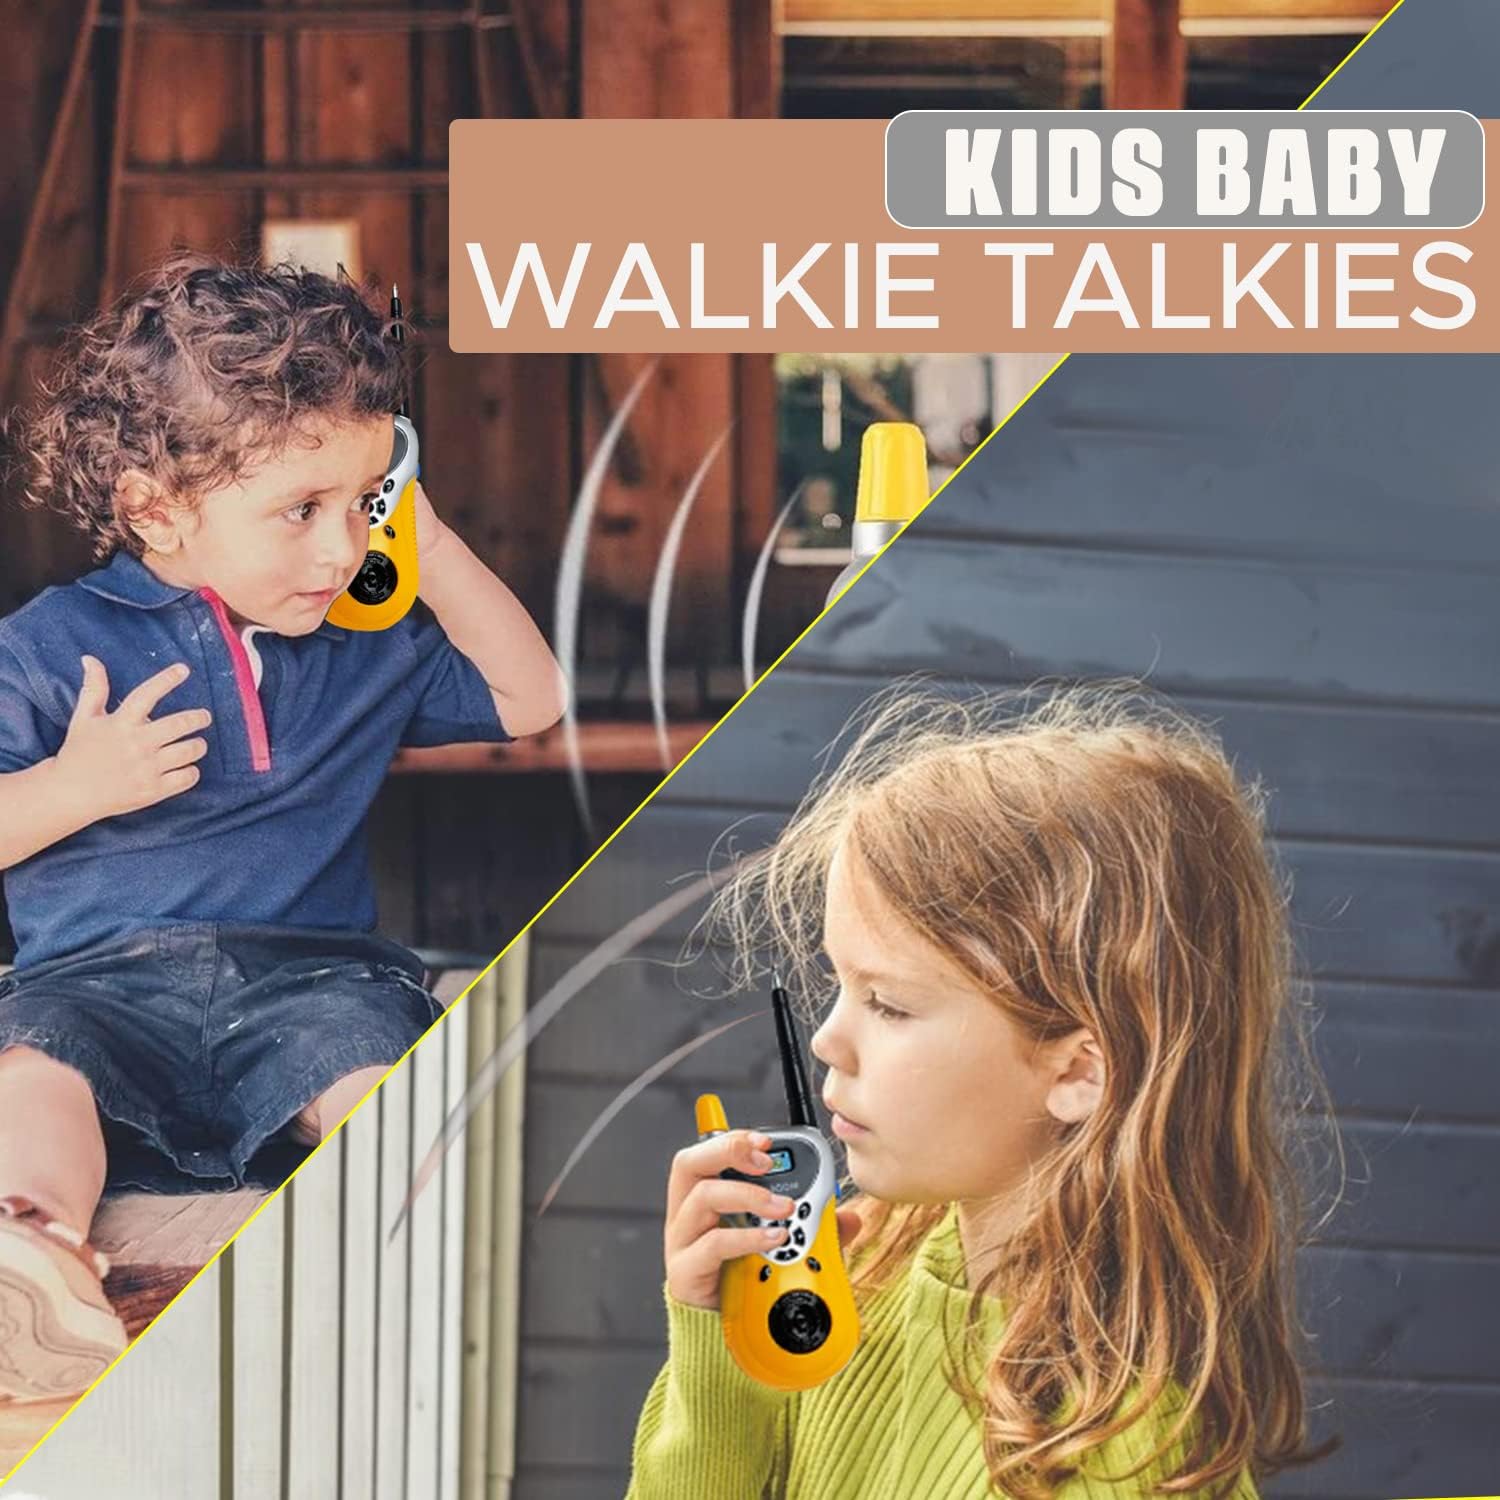 4481 Walkie Talkie Toys for Kids 2 Way Radio Toy for 3-12 Year Old Boys Girls, Up to 80 Meter Outdoor Range DeoDap